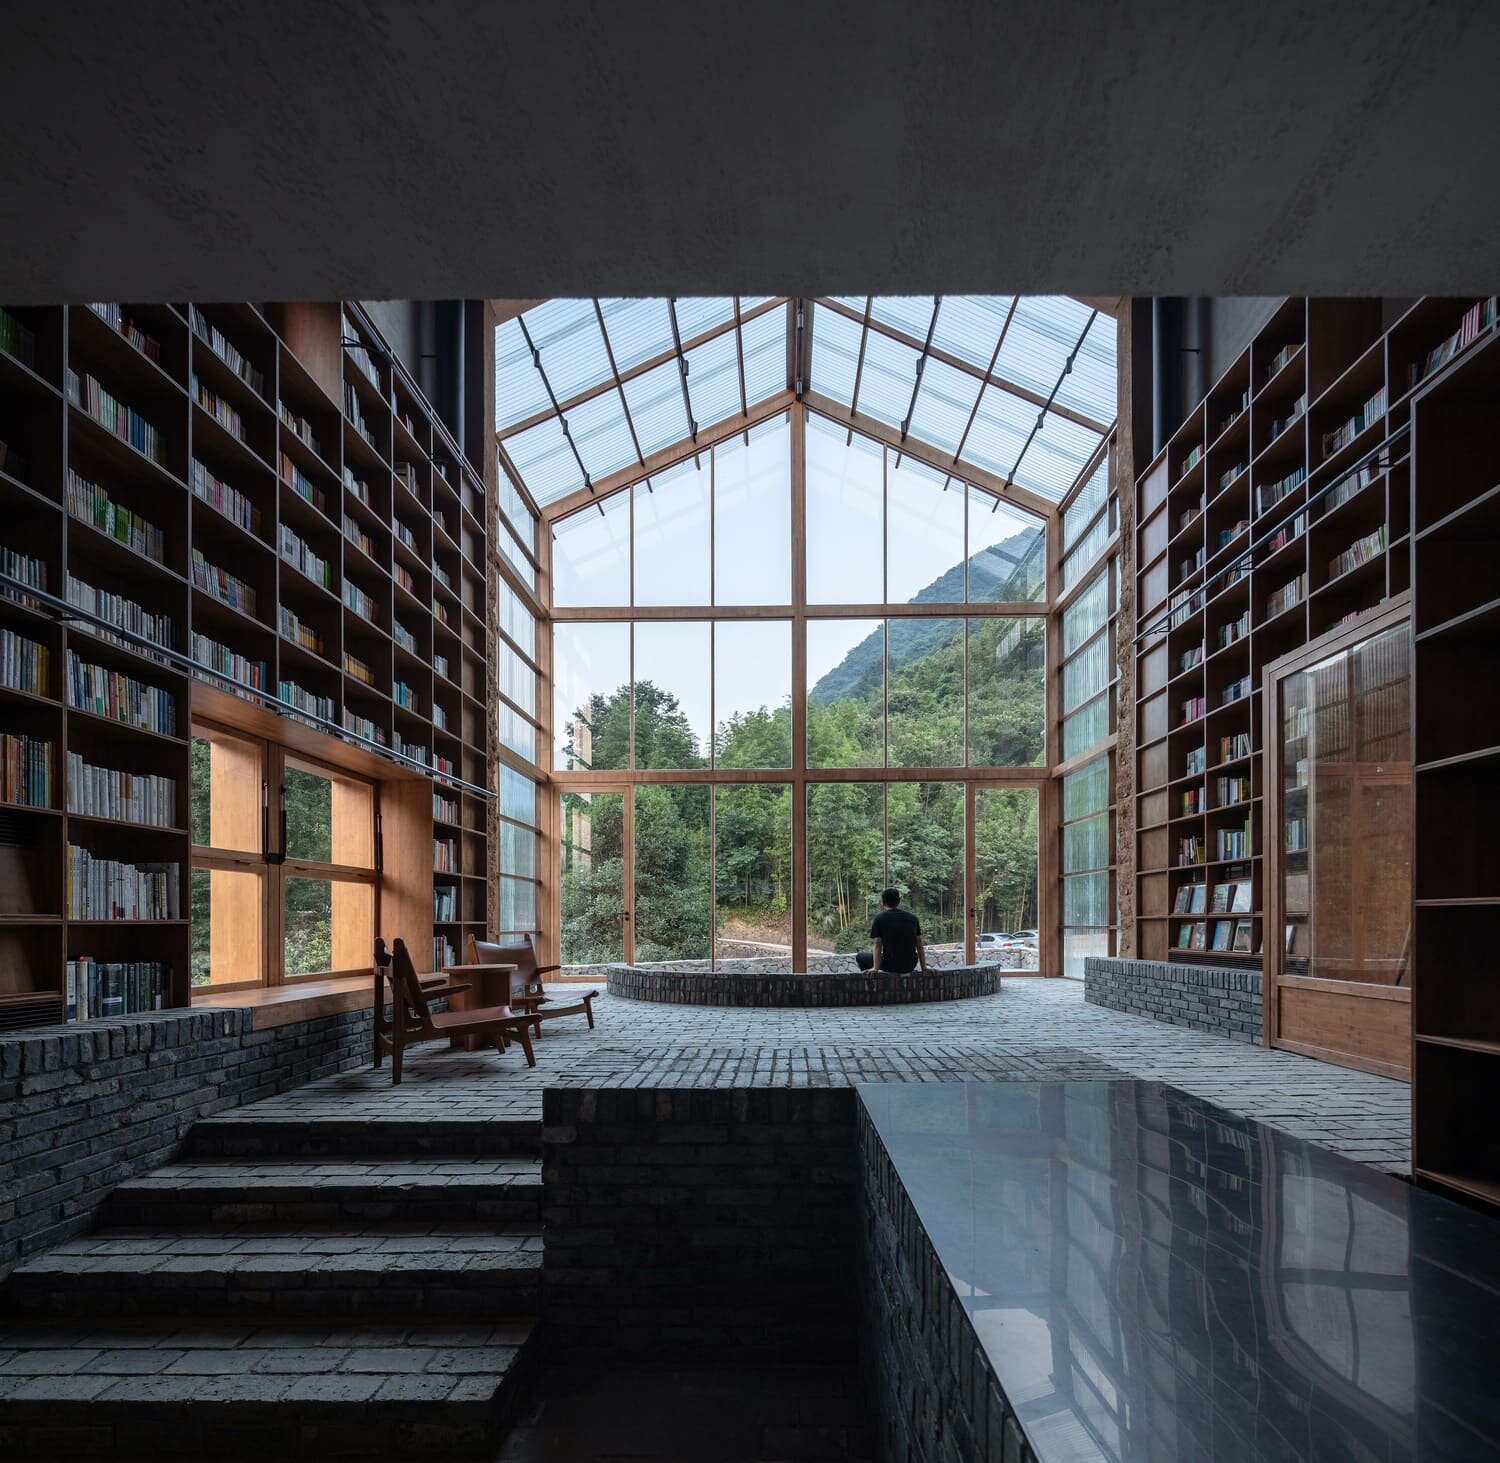 tao+c-Bookstore-Su Sheng Liang-Visual Atelier 8-Architecture-6.jpg